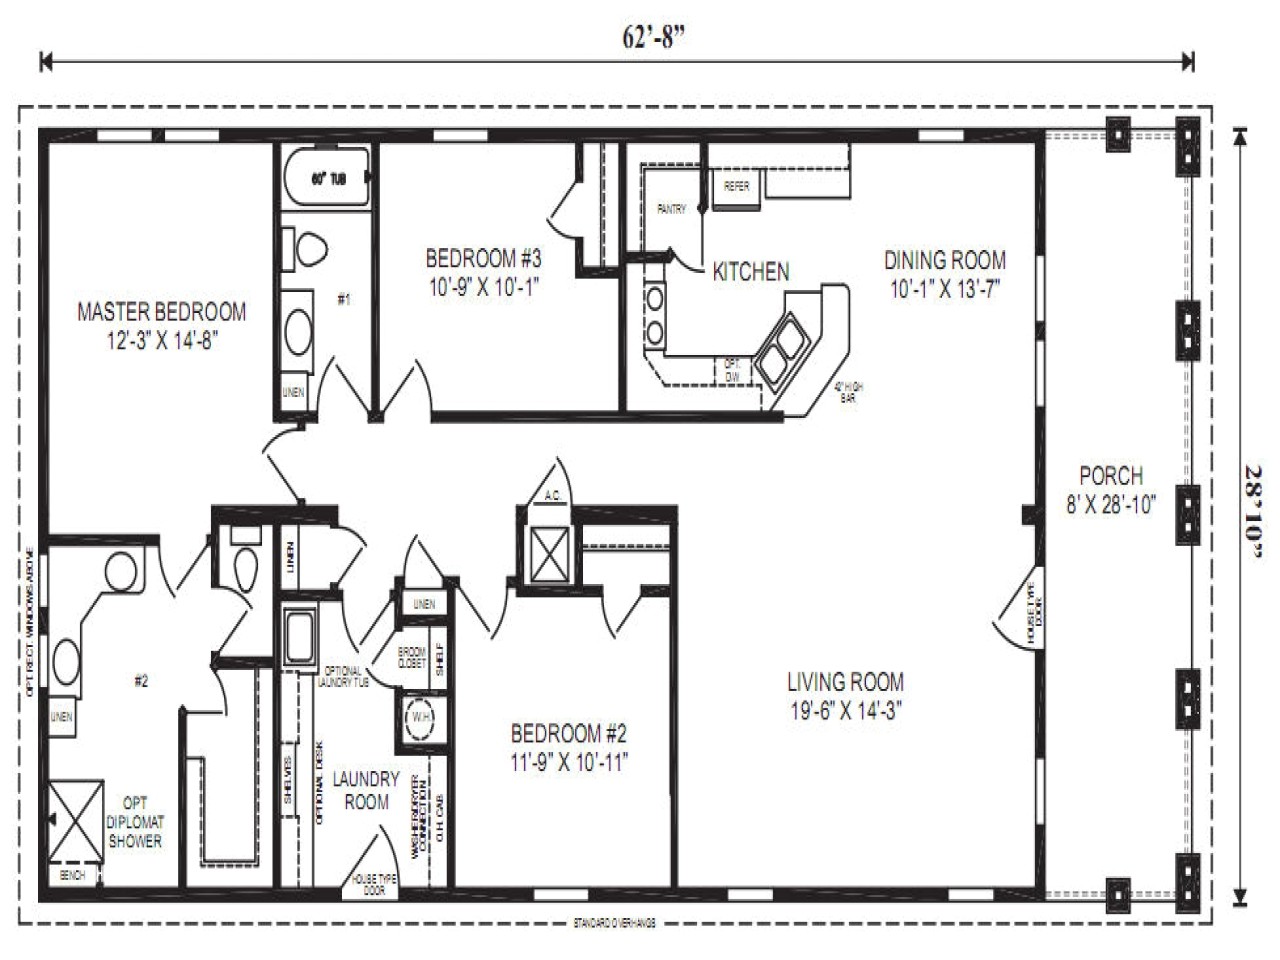 Select Homes Floor Plans Modular Home Floor Plans Modular Ranch Floor Plans Floor